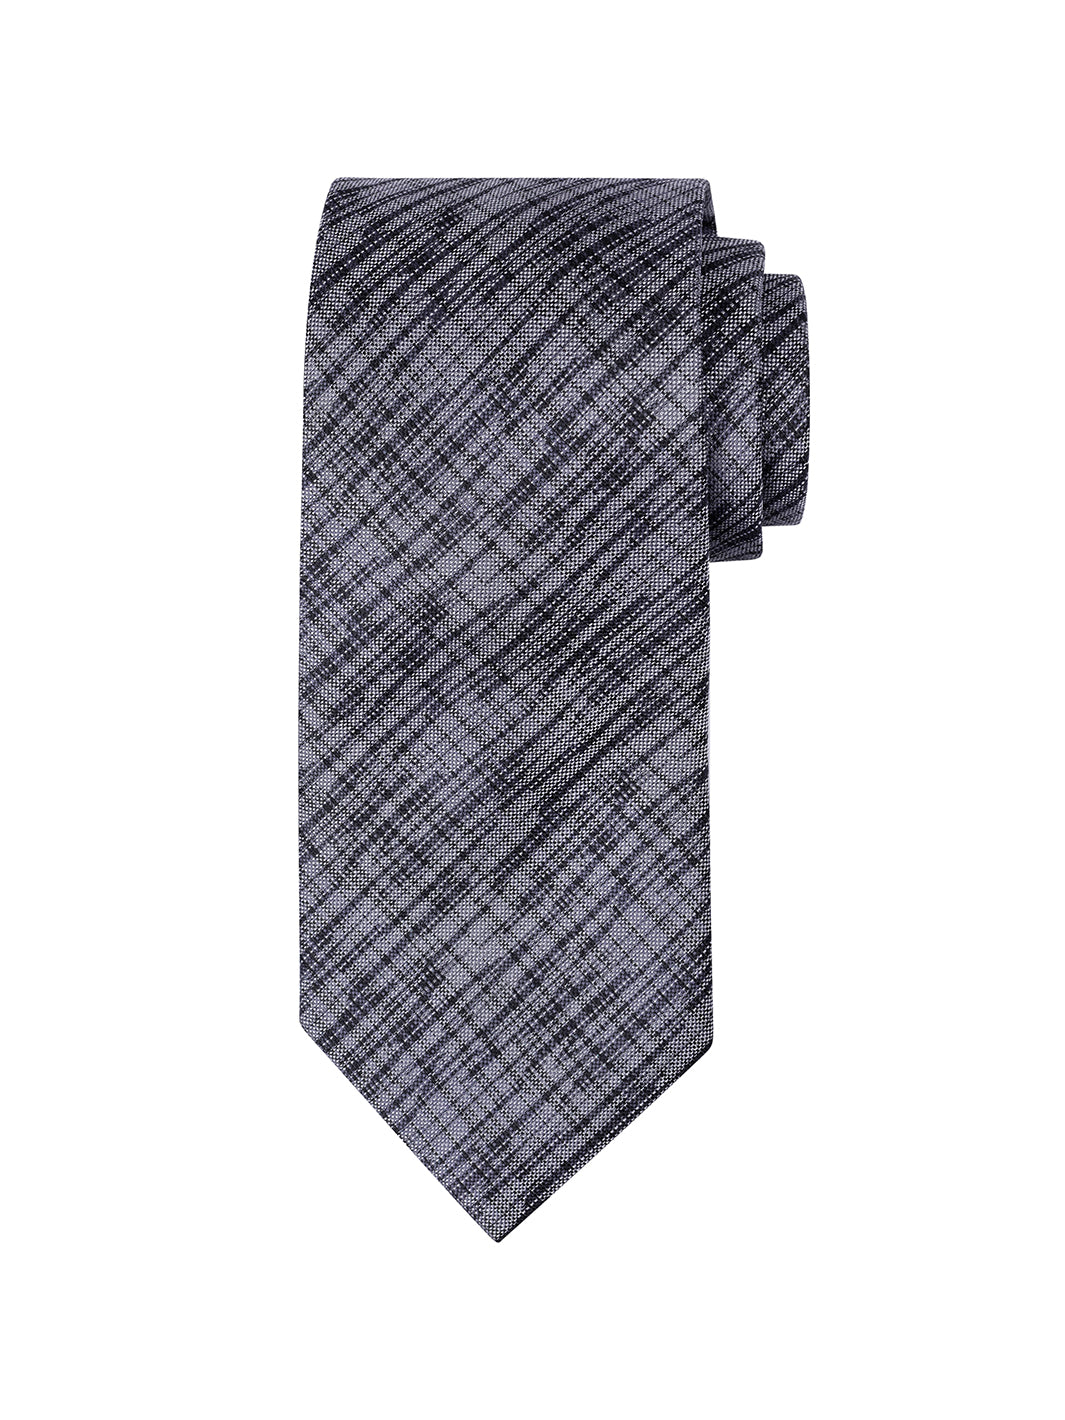 Men's T.O. Collection CrissCross Tie - Grey